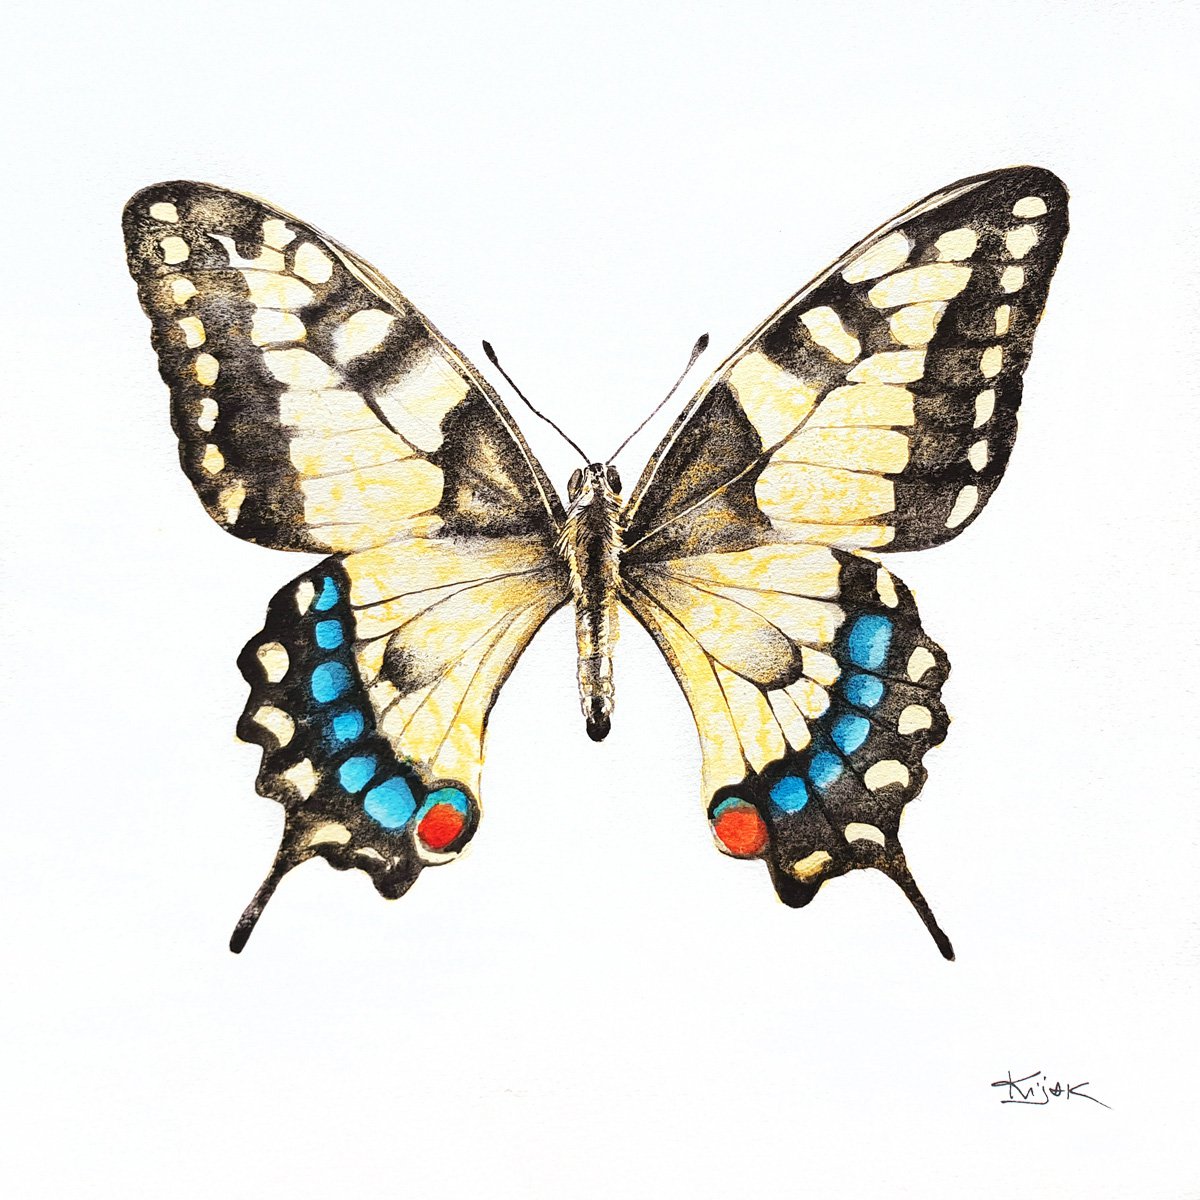 The Swallowtail butterfly, 30x30cm, wildlife watercolour painting by Karolina Kijak